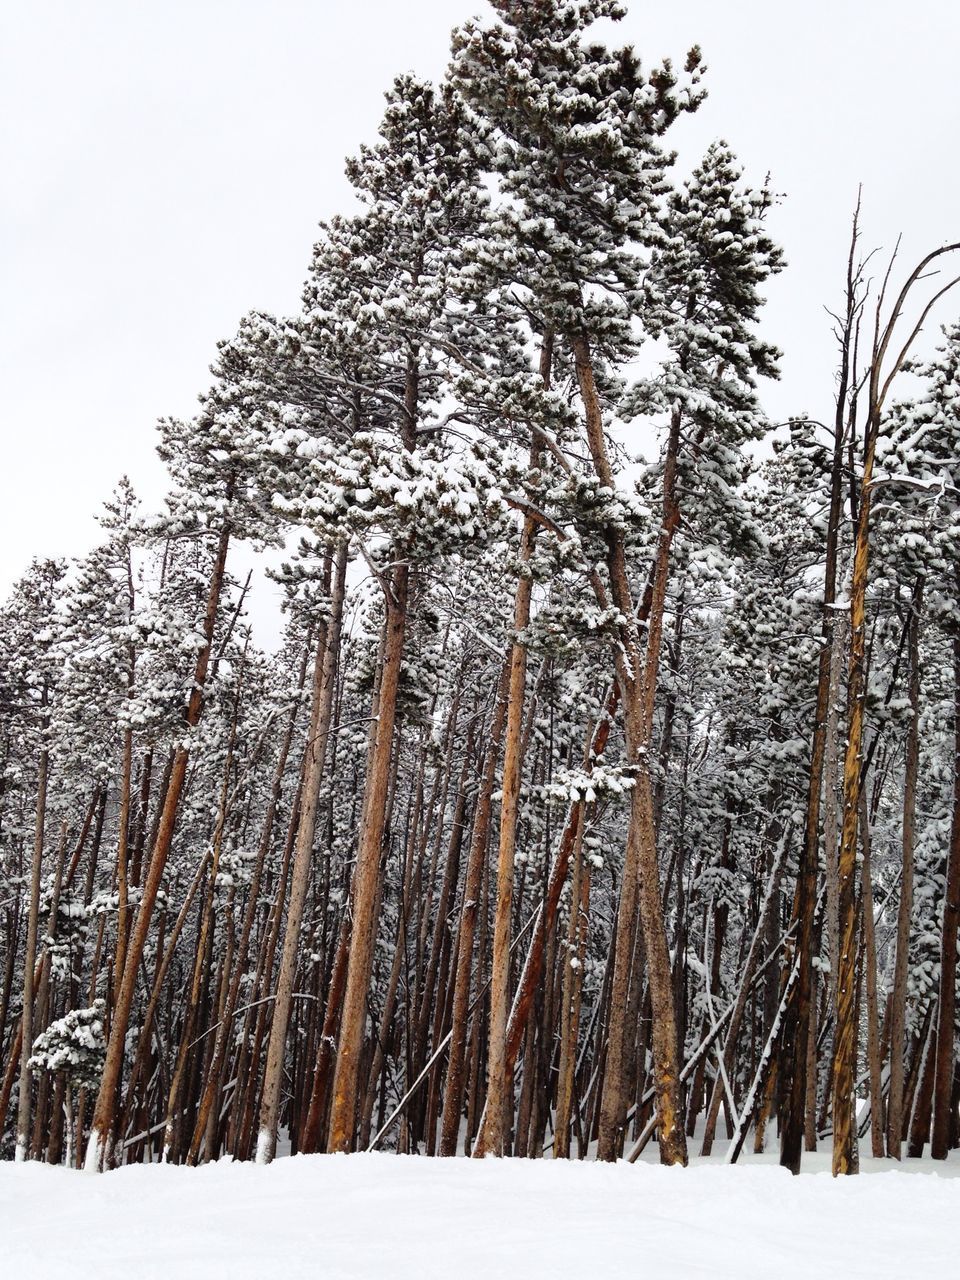 PINE TREES ON SNOWY FIELD AGAINST SKY